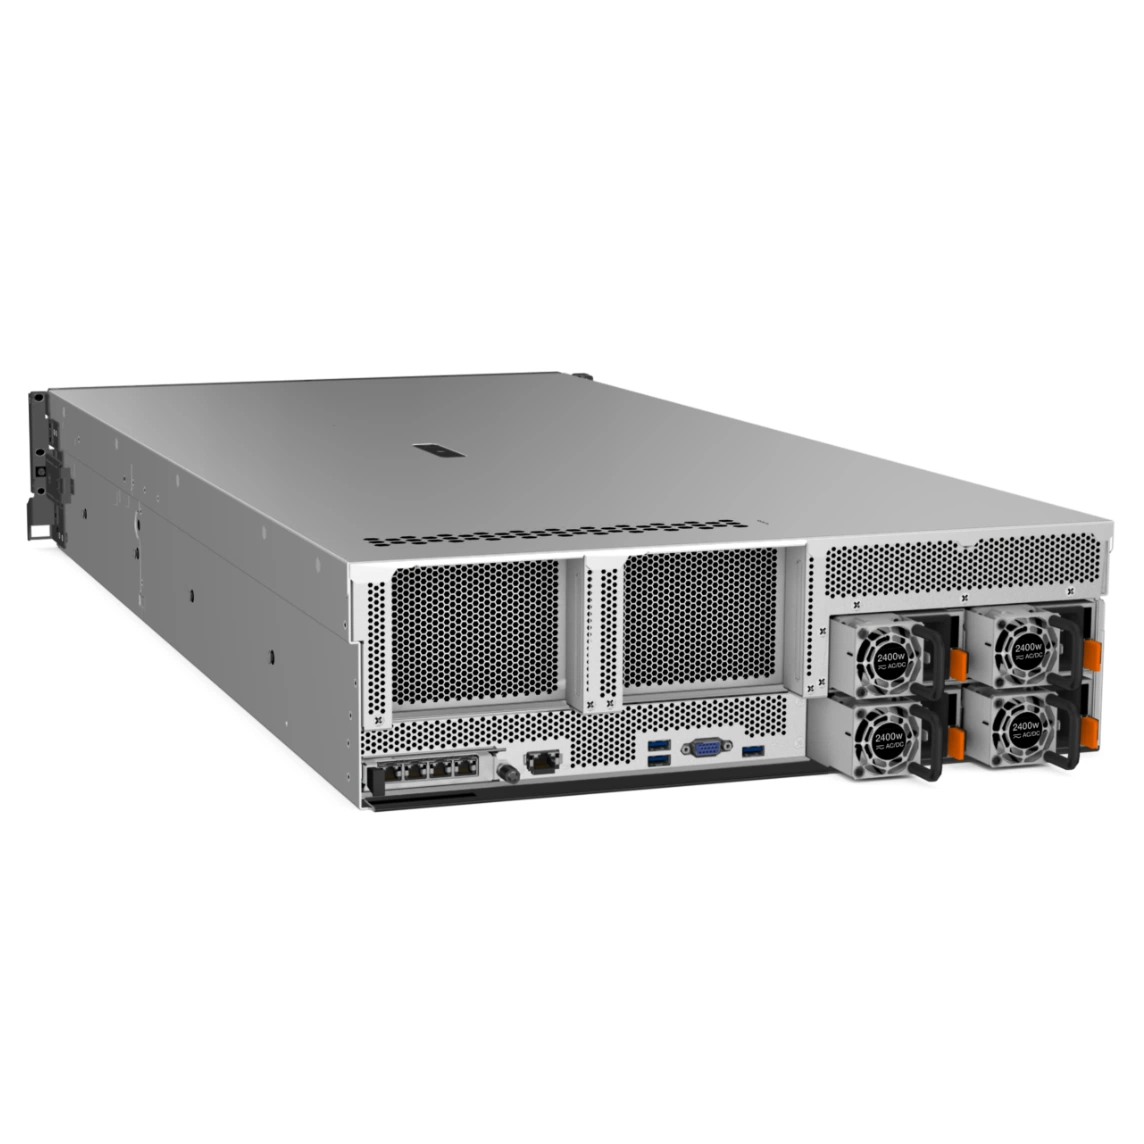 L Enovo Sr670 V2 Server in Tel Xeon Silver 4310 12c 120W Processo 3u Rack Server